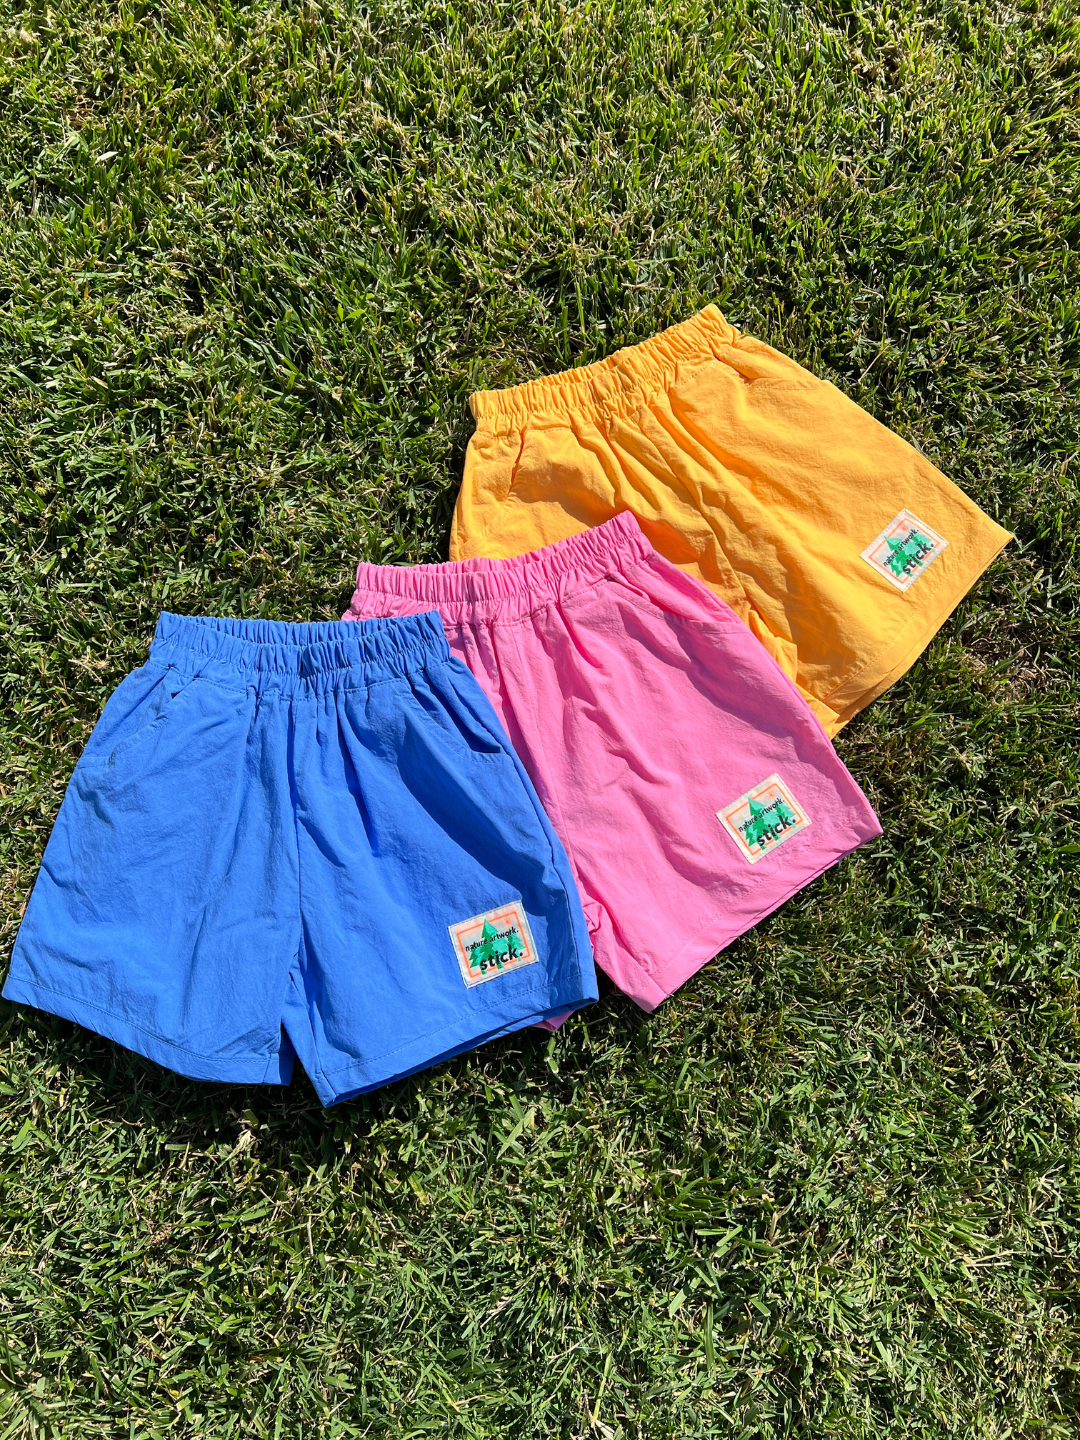 Mango | Blue Raspberry | Blue, pink and orange kids' shorts arranged on grass.